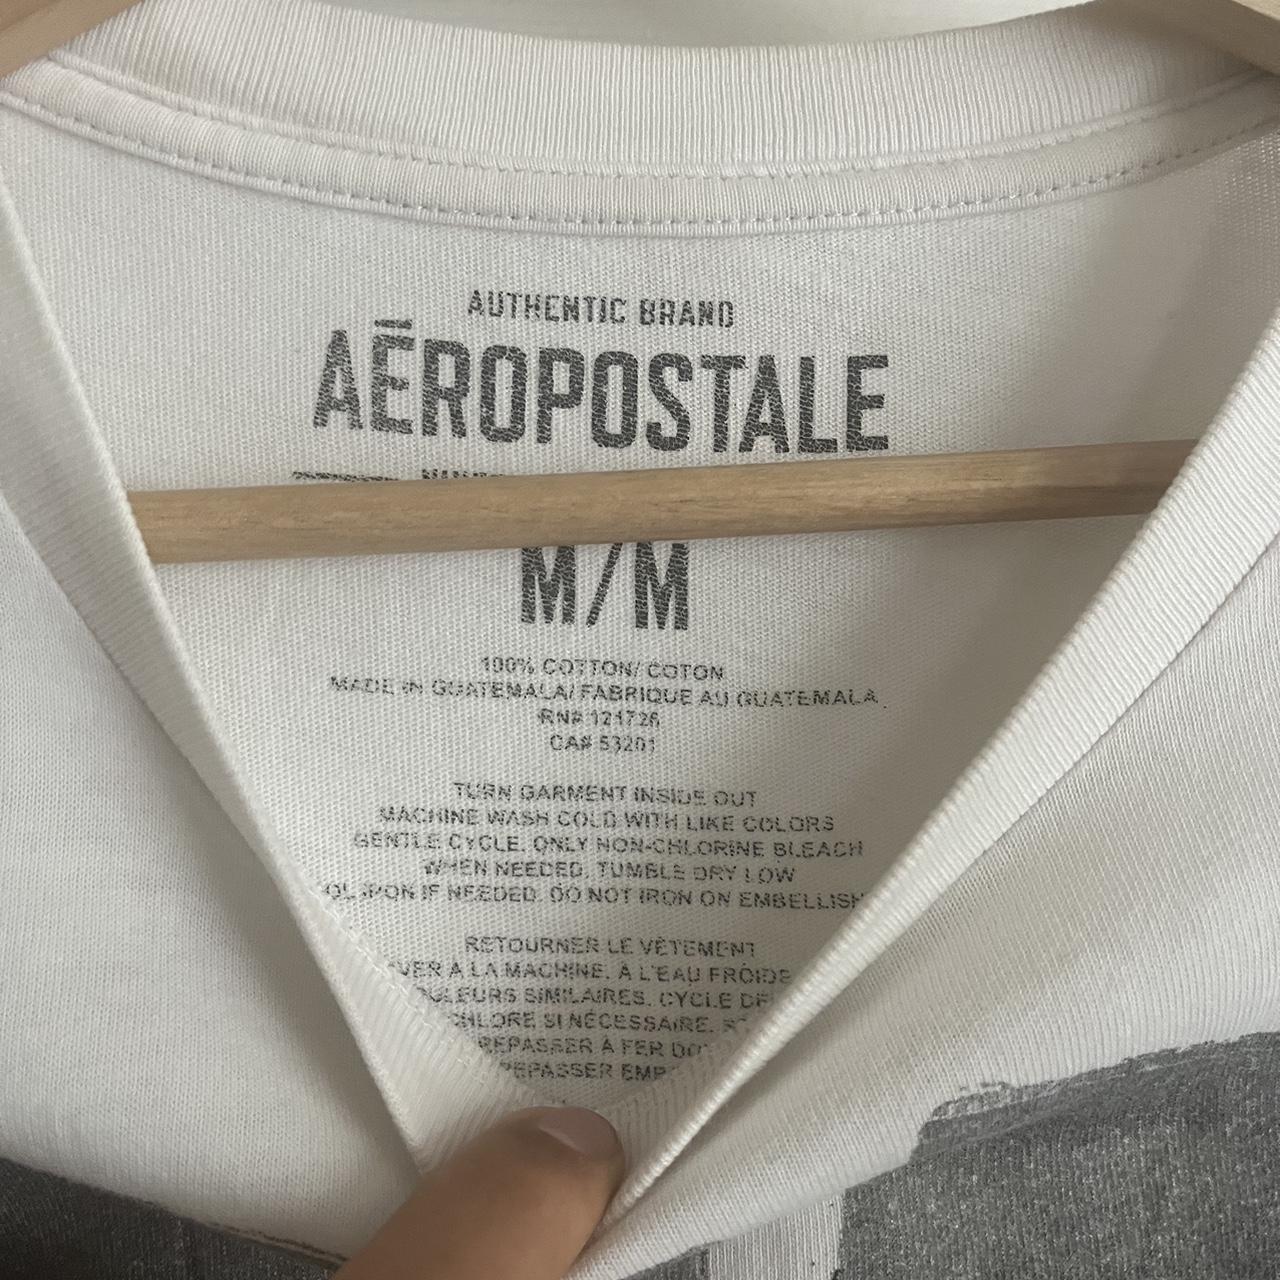 can you not shirt aeropostale